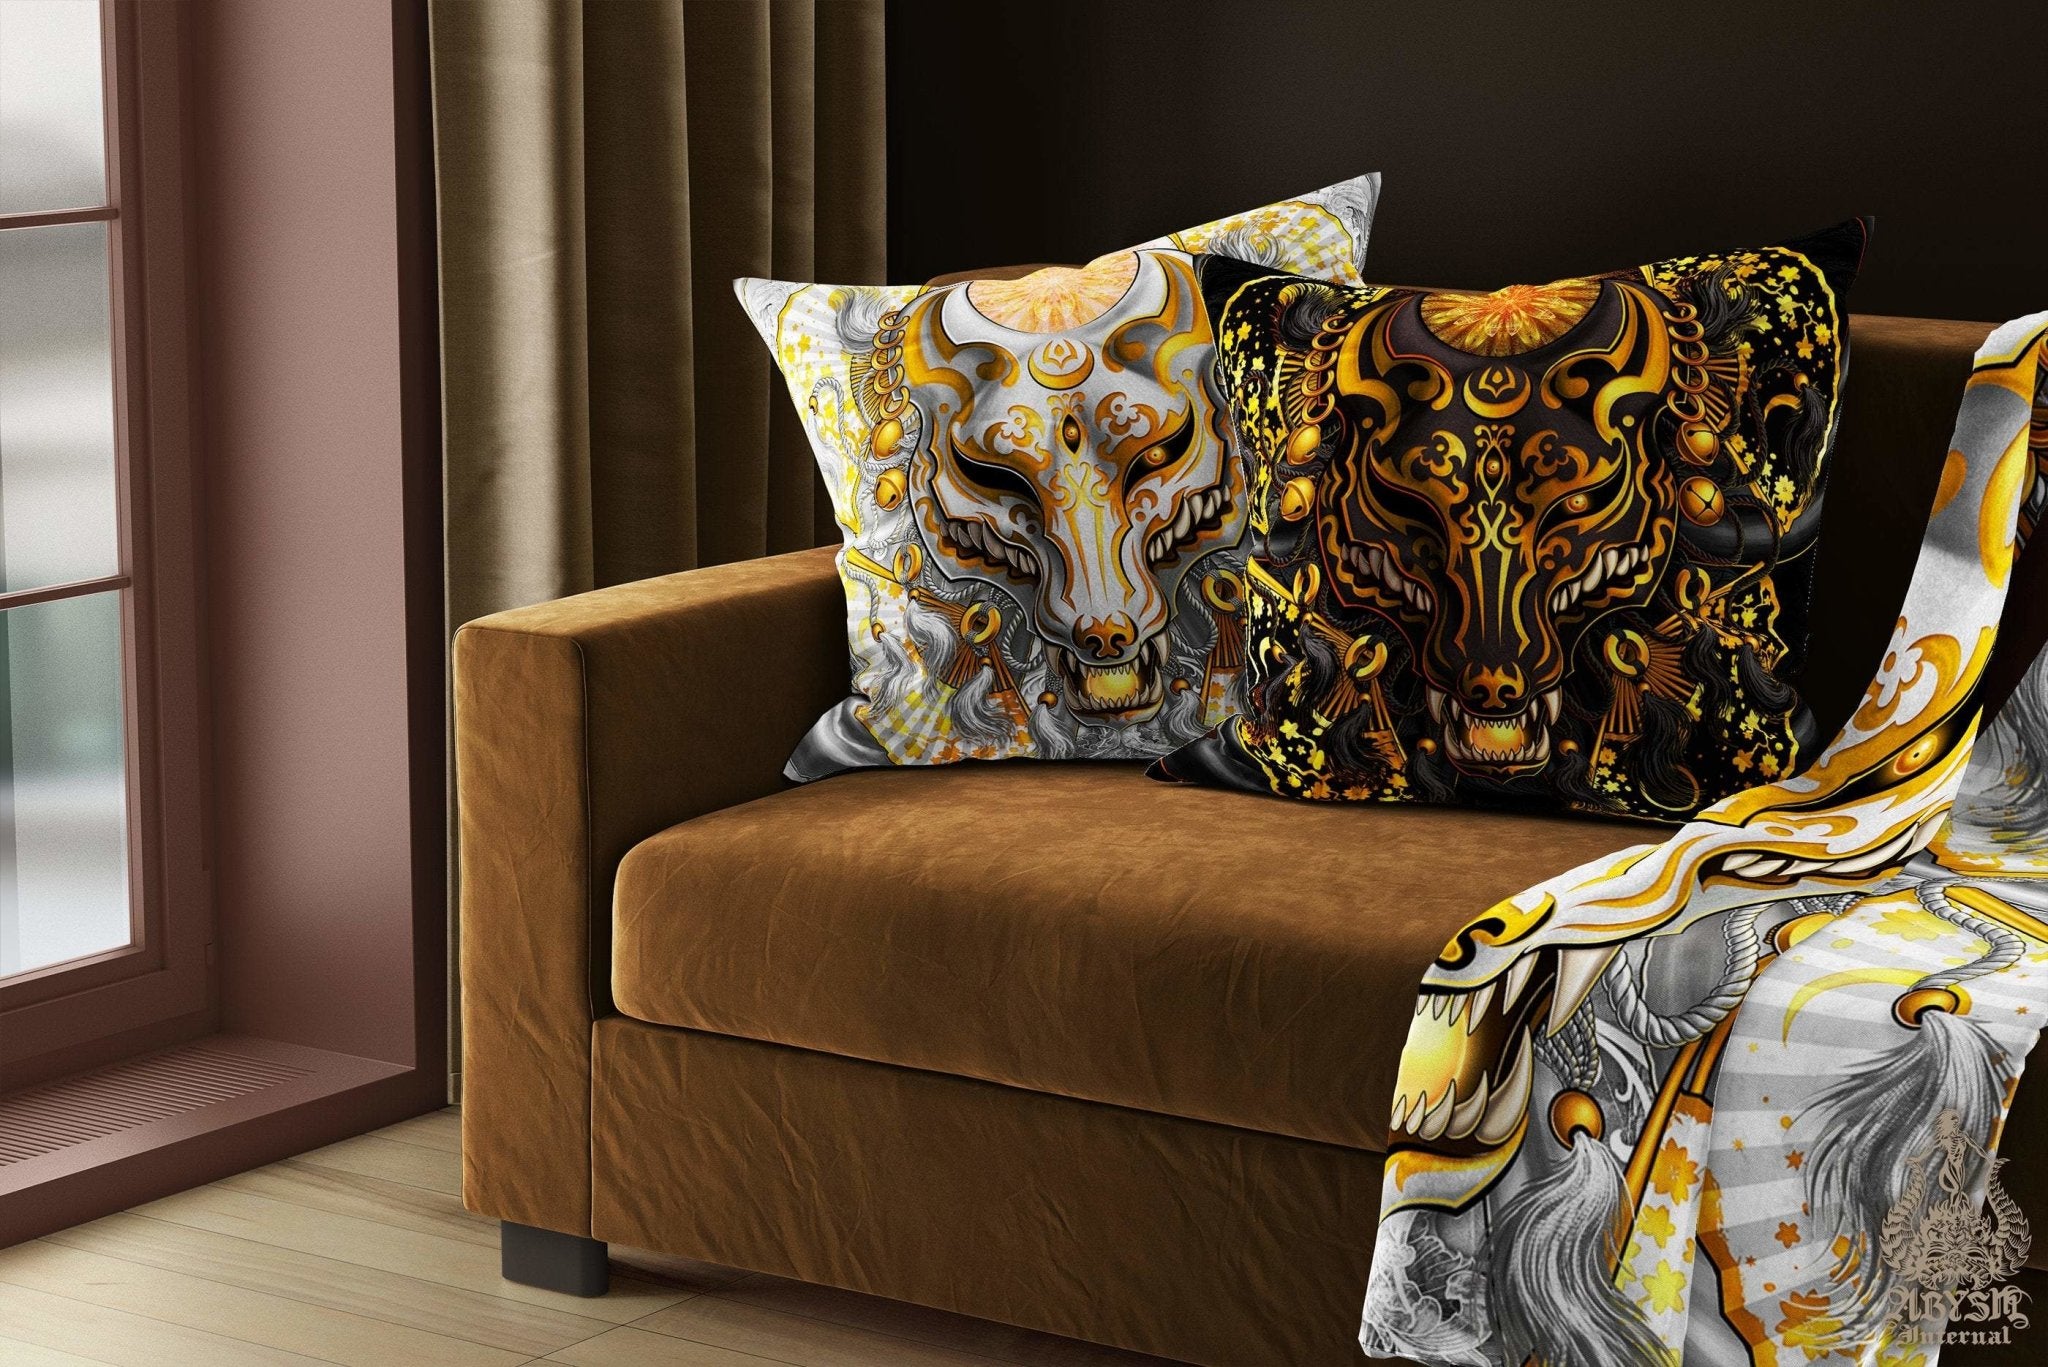 Kitsune Throw Pillow, Decorative Accent Cushion, Japanese Fox Mask, Okami, Anime and Gamer Room Decor - White & Gold - Abysm Internal